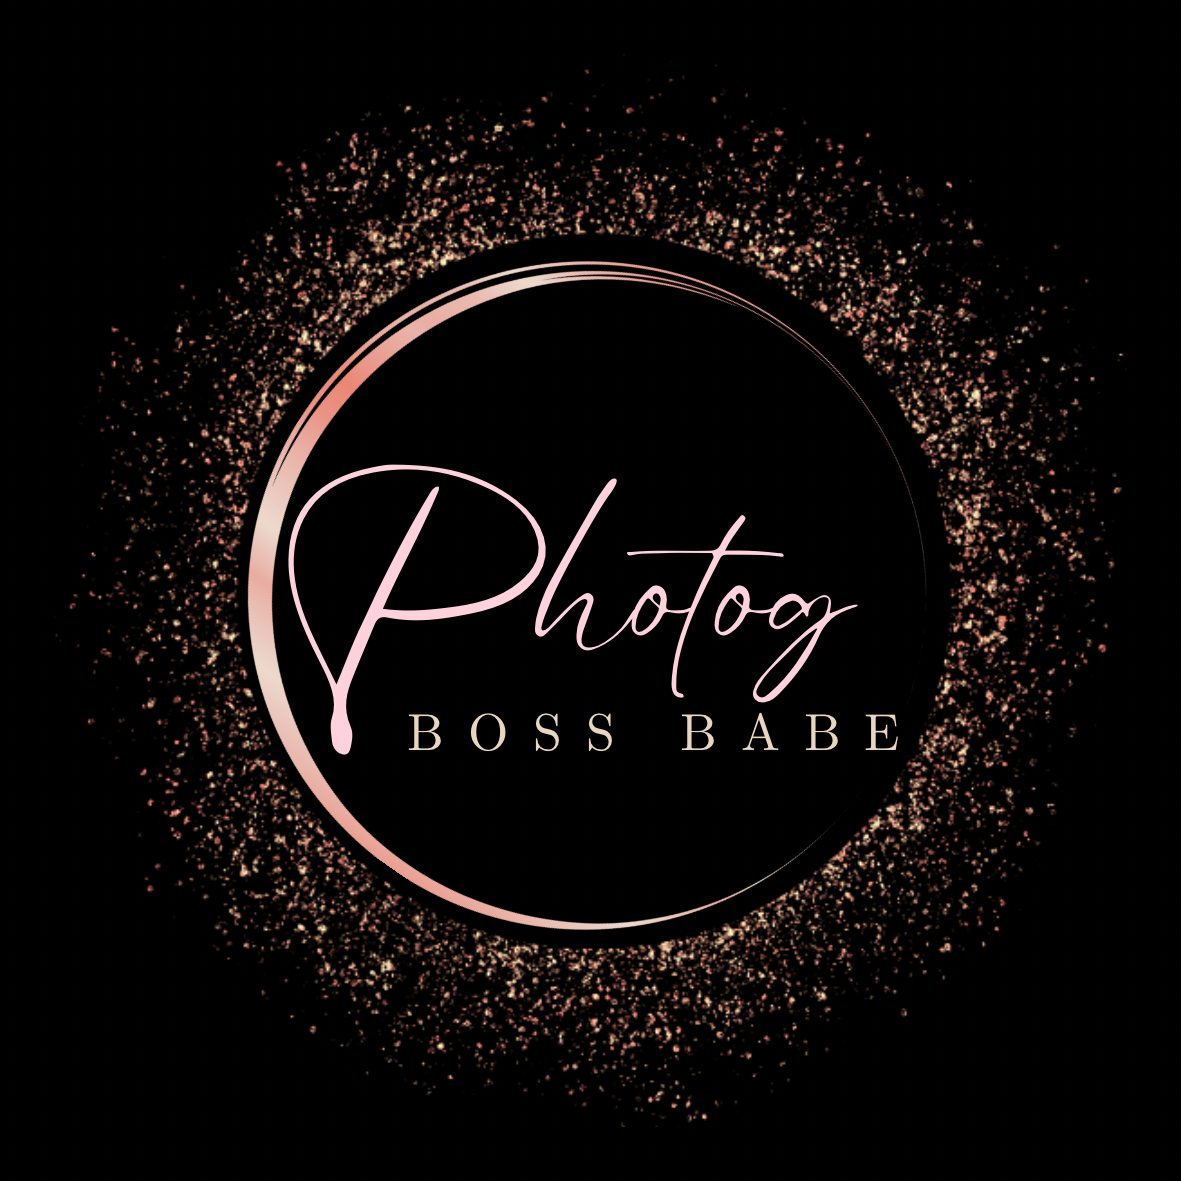 Photog Boss Babe, LLC by Charrie Stambaugh